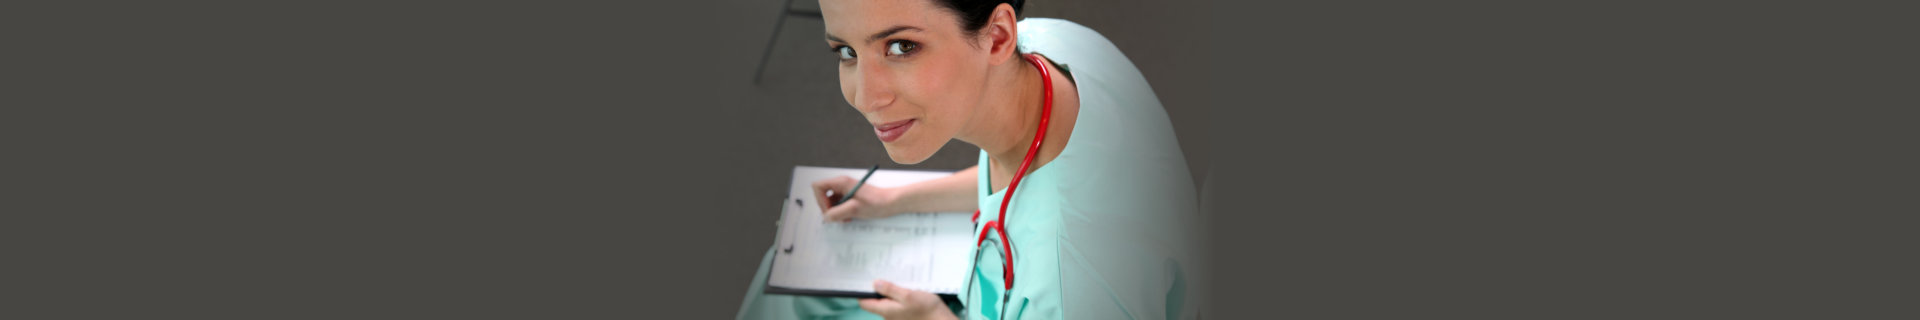 nurse filling out medical files